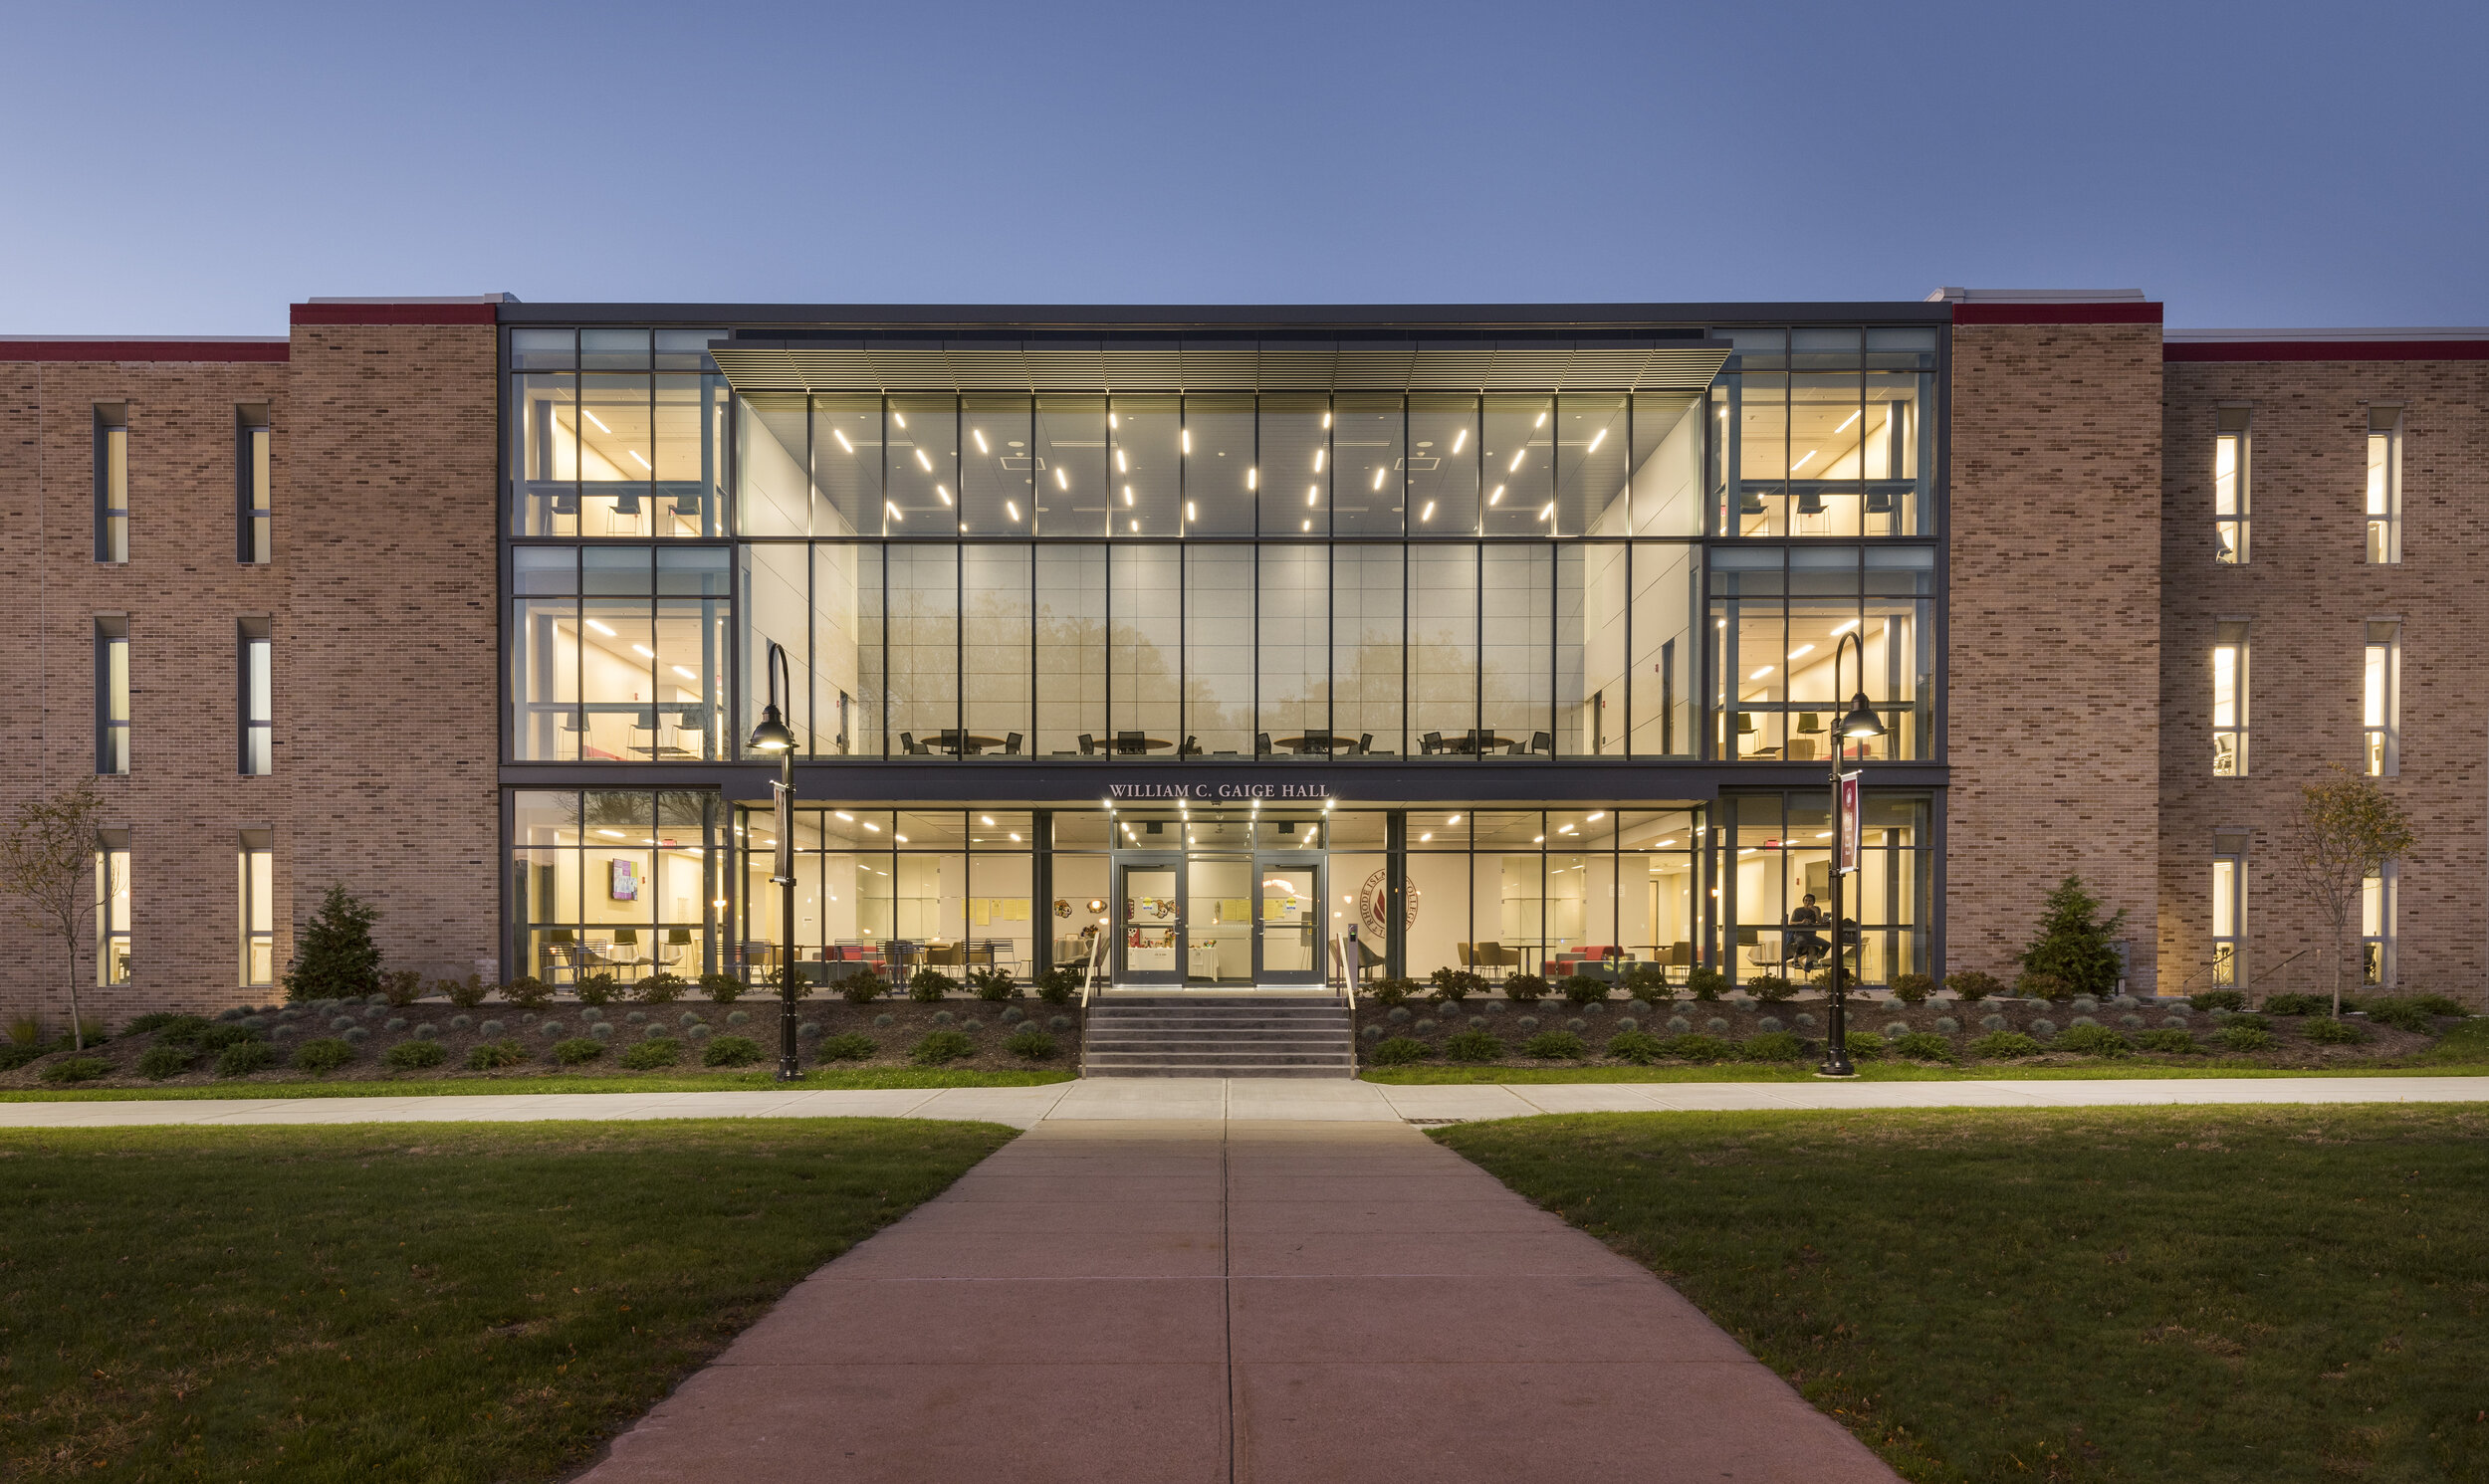  Rhode Island College  LLB Architects   